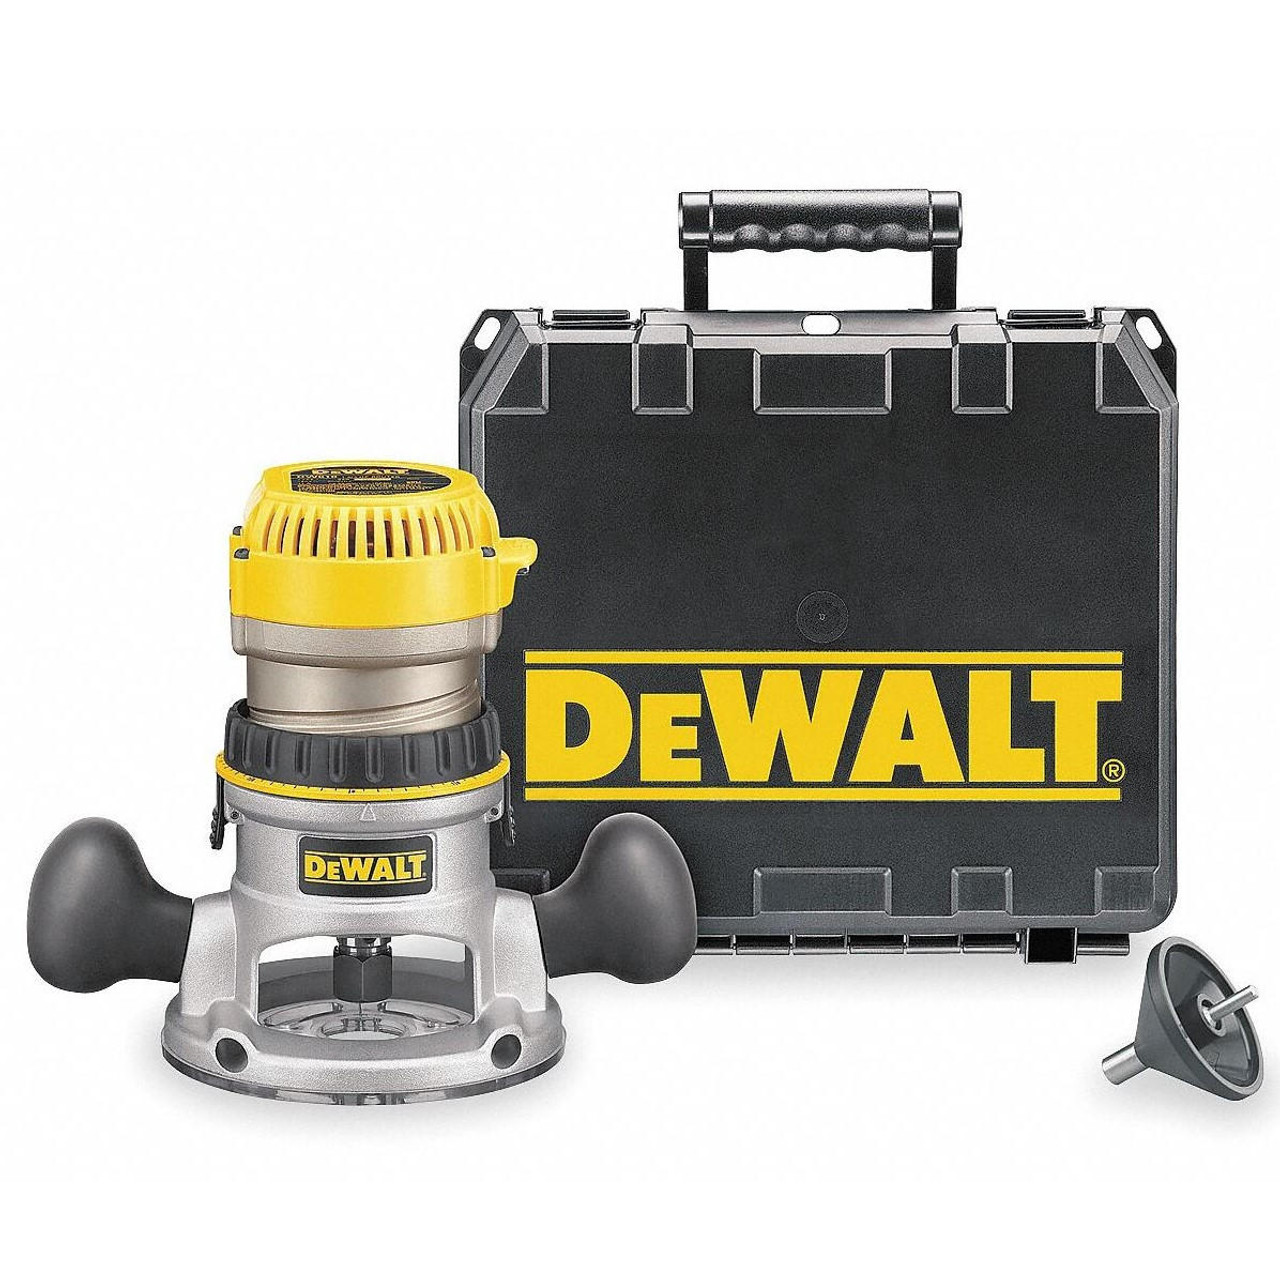 Dewalt DEWALT 1-3/4 Hp Fixed Base Router Kit DW616K 